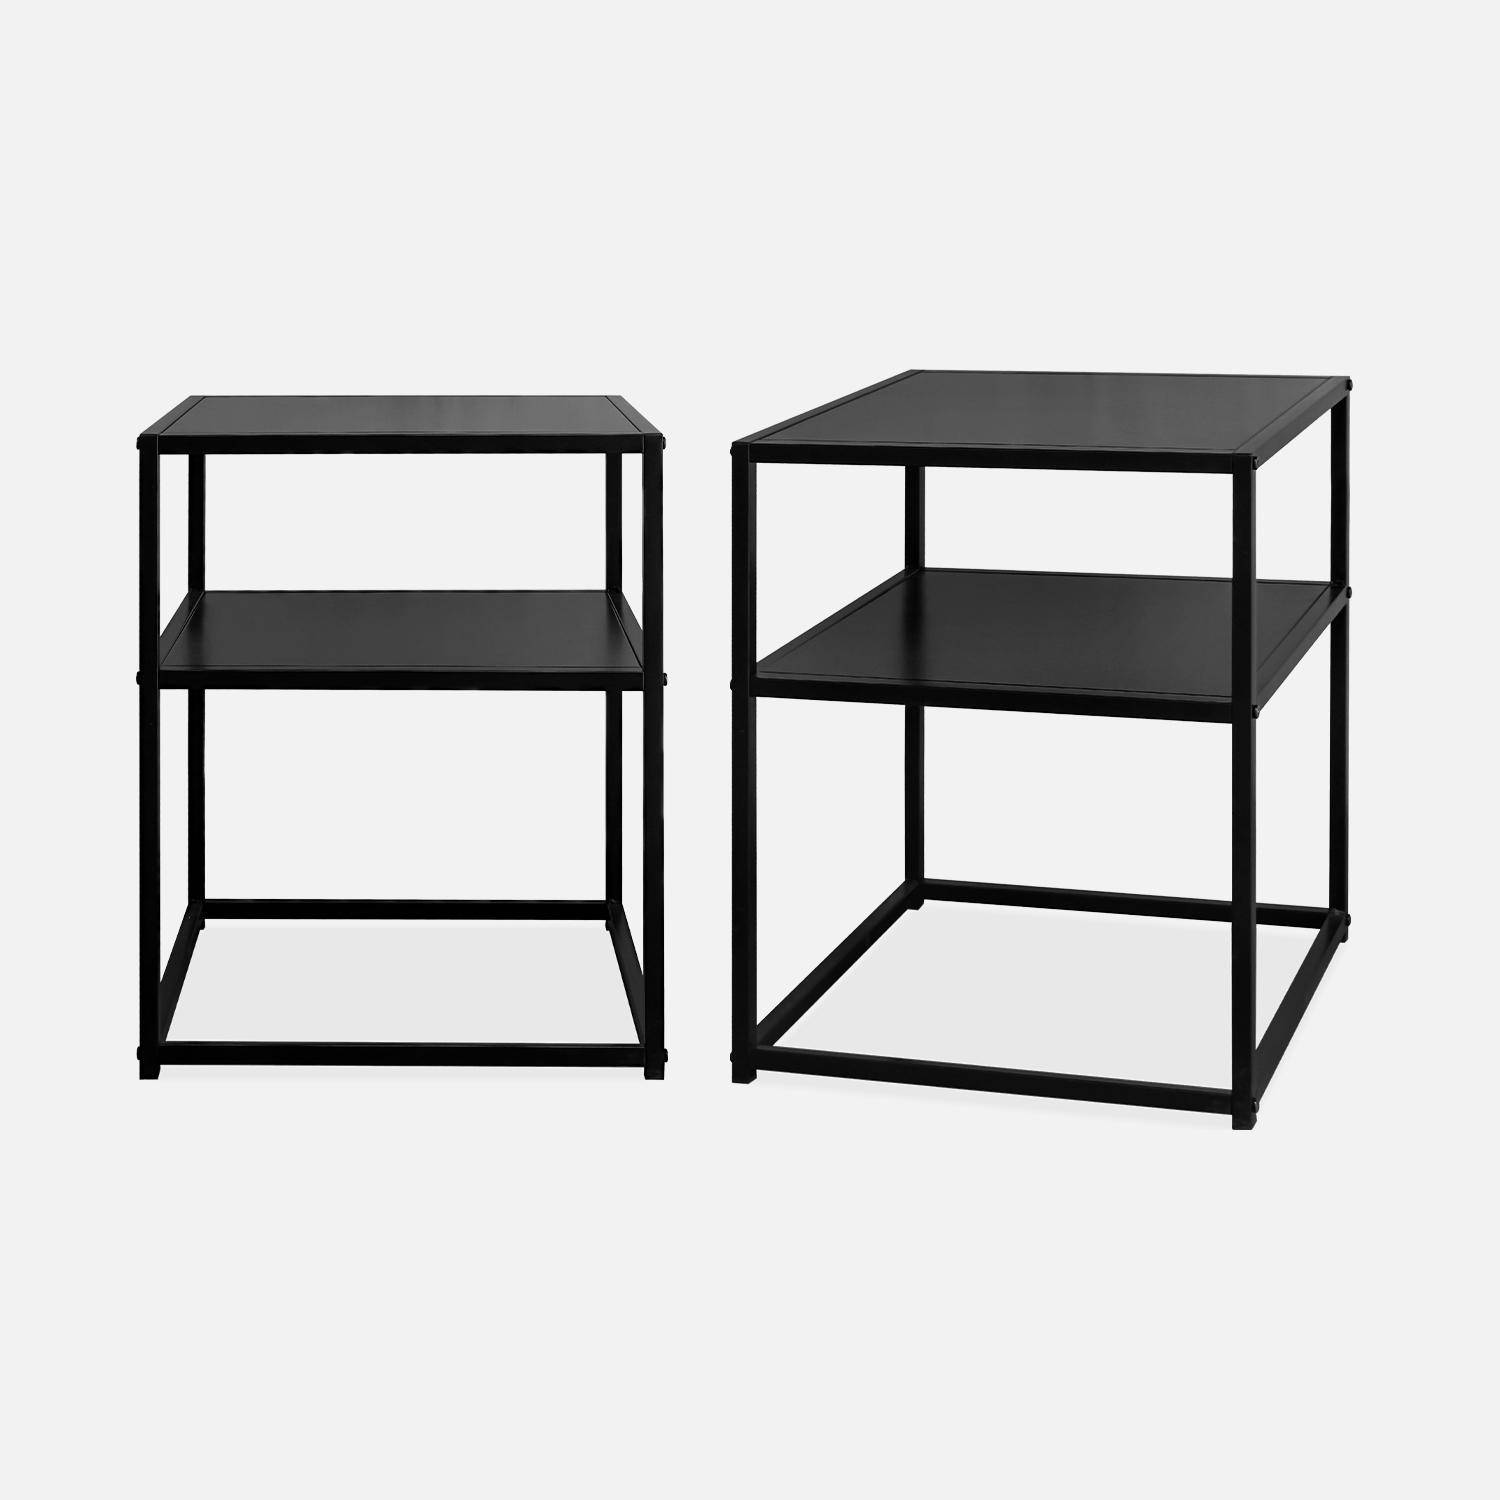 Set of 2 black metal bedside tables, 1 shelf, INDUSTRIAL L43xW40xH52cm,sweeek,Photo4